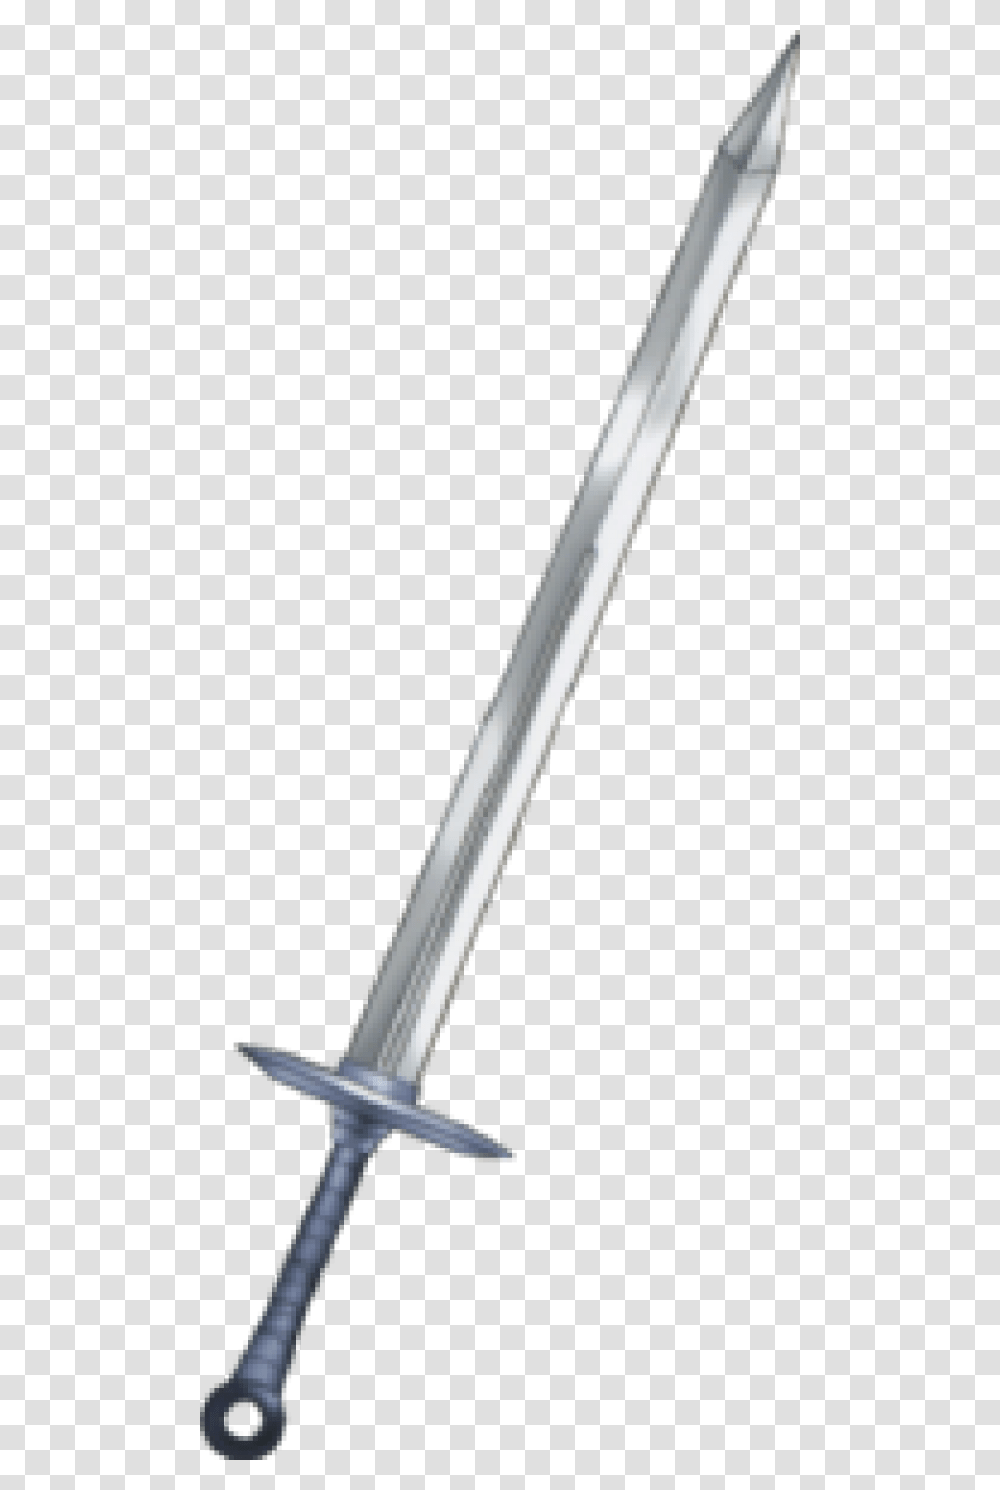 Steel Sword Fire Emblem Wiki Steel Sword Fire Emblem, Blade, Weapon, Cutlery, Fork Transparent Png